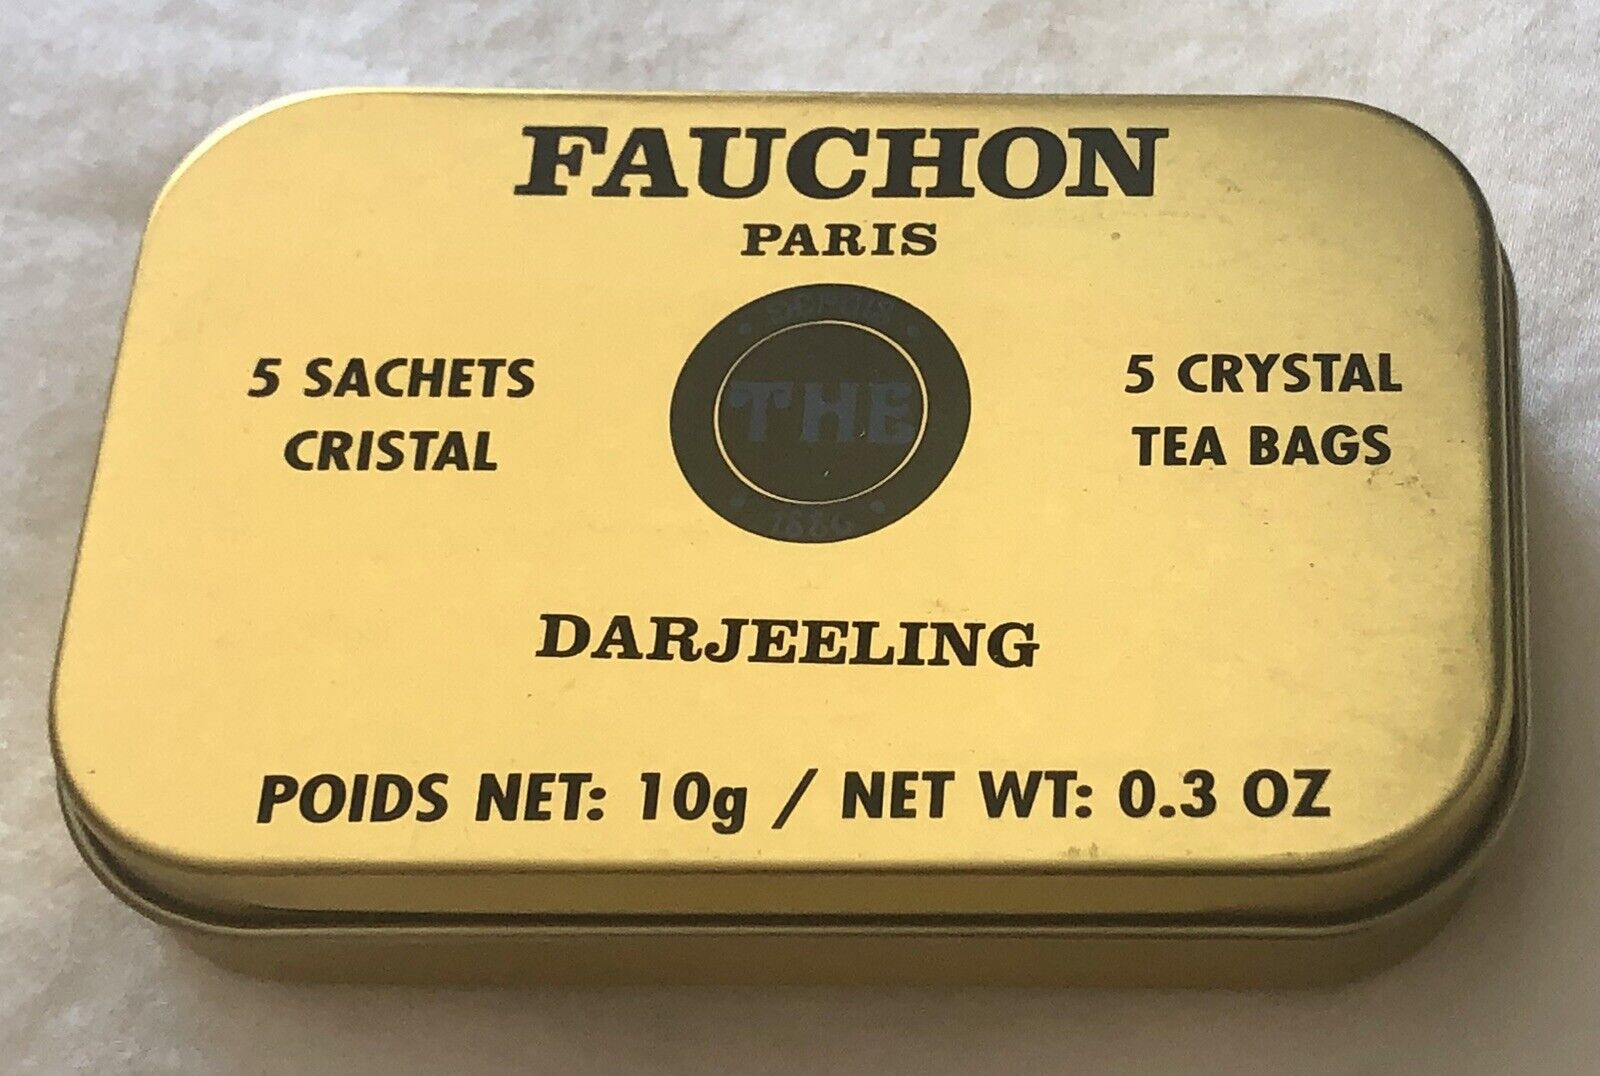 VINTAGE FAUCHON OF PARIS PROMOTIONAL GOLD TIN/ BOX